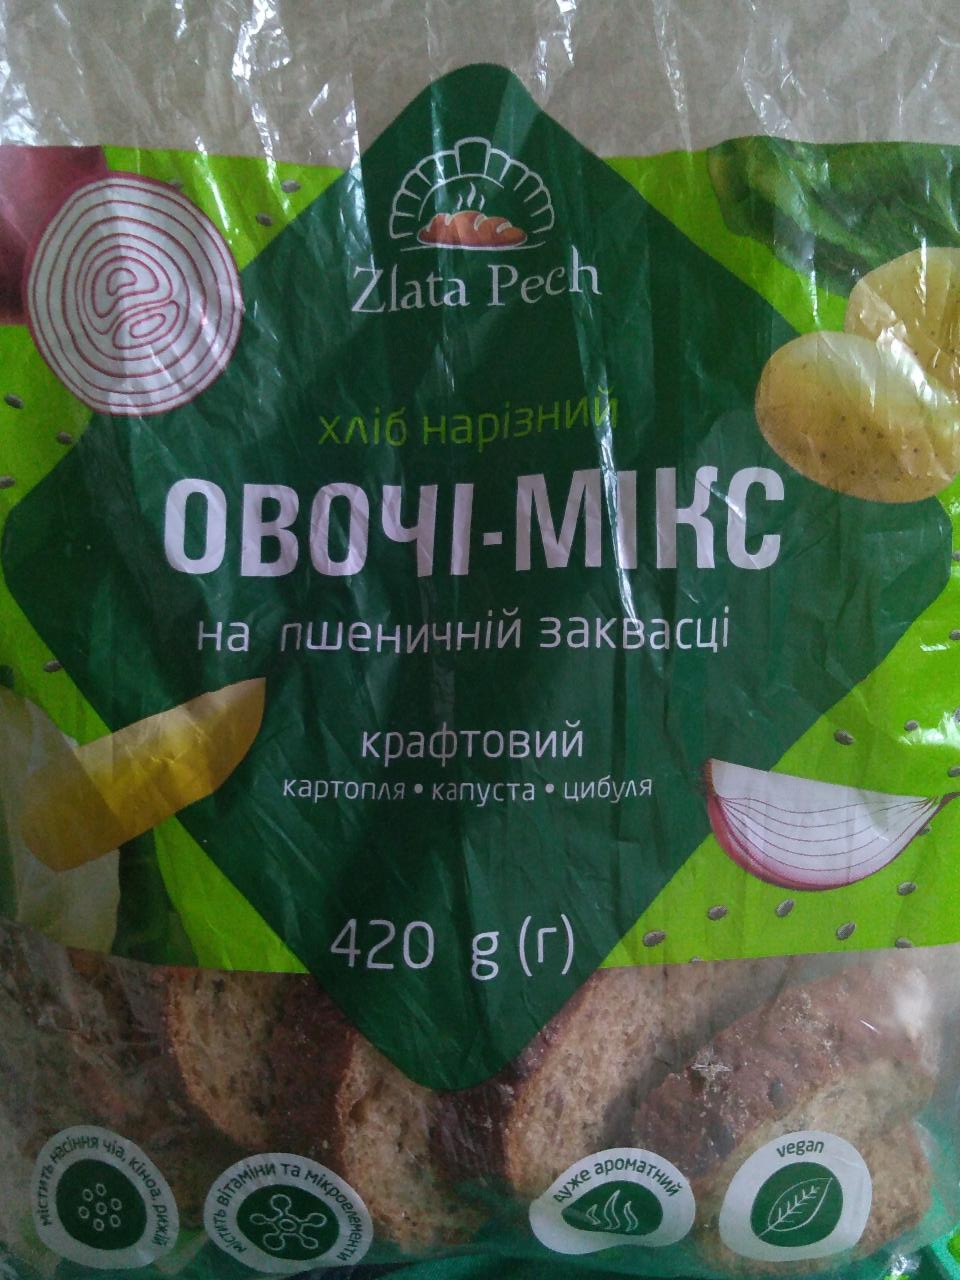 Фото - Хлеб овощи-микс Zlata Pech